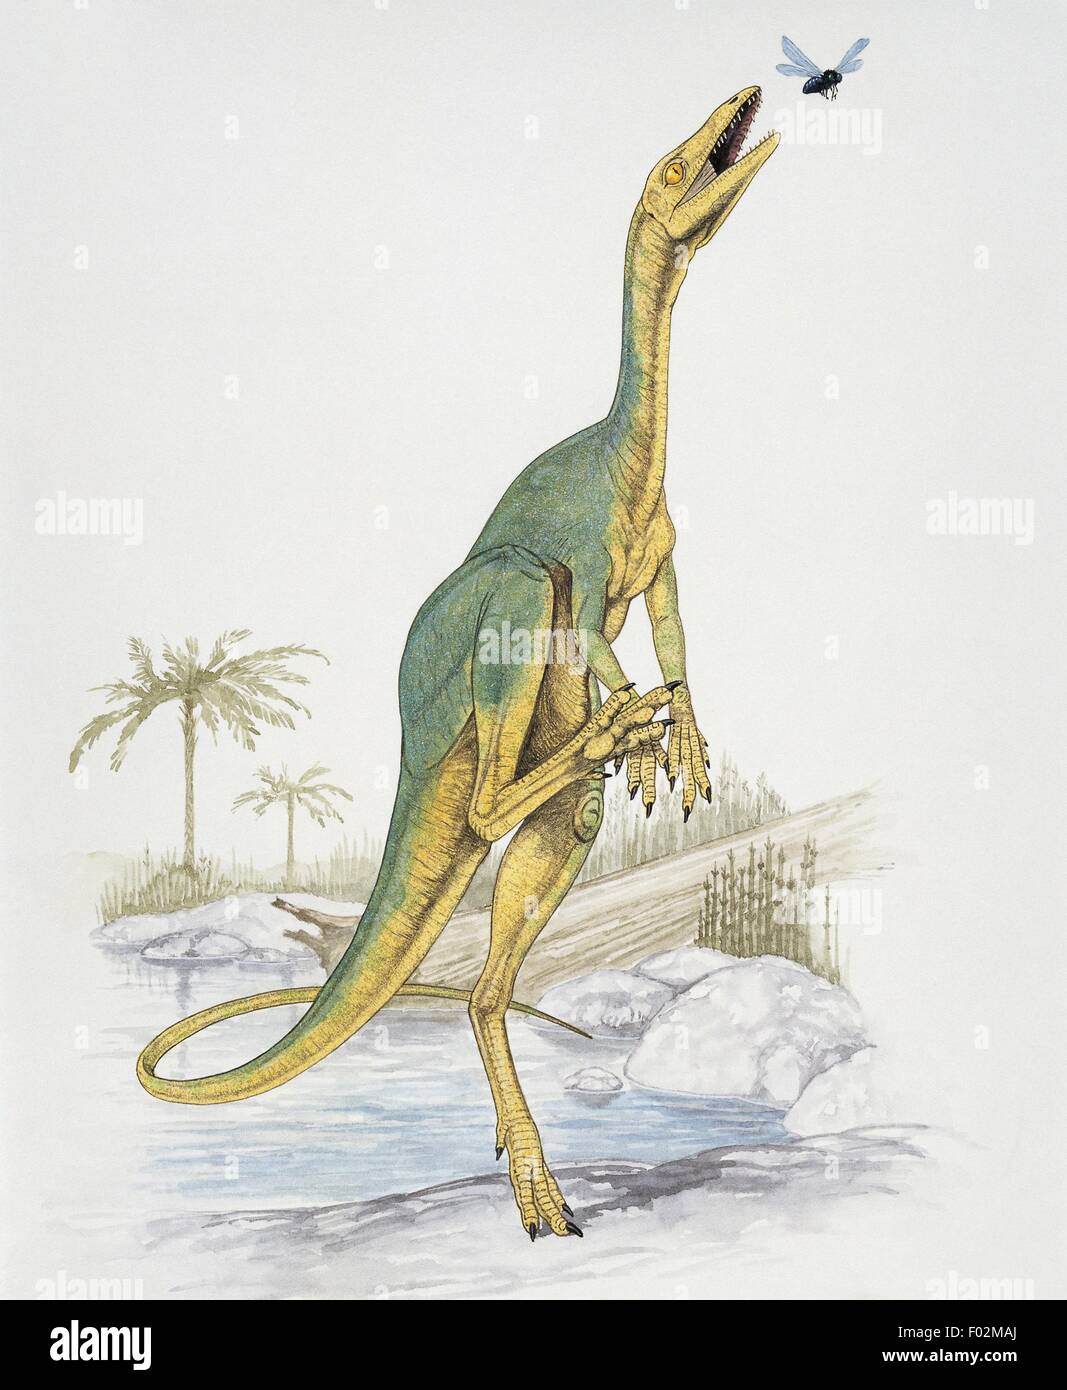 Palaeozoology - Triassic Period - Dinosaurs - Protoavis (art work by Graham Rosewarne) Stock Photo